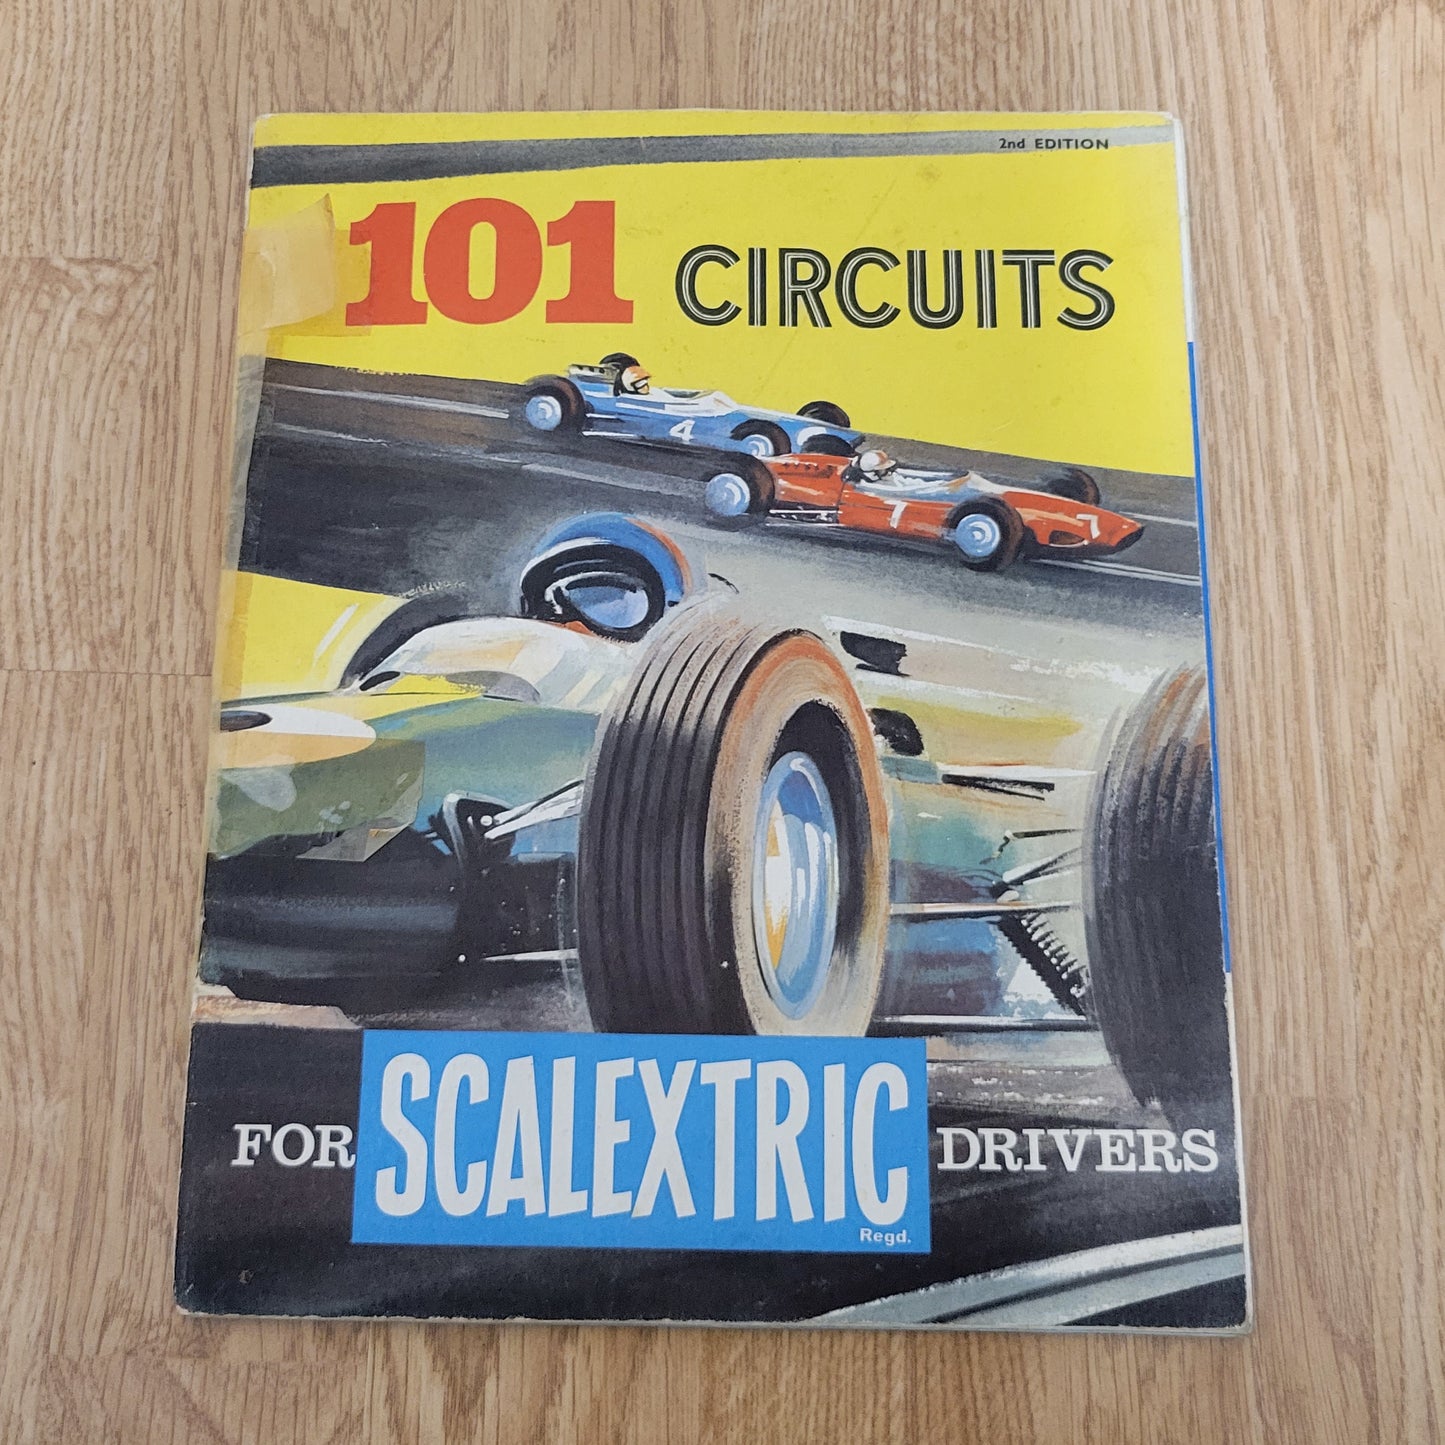 Scalextric Catalogue Literature Magazine - 101 Circuits 2nd Edition